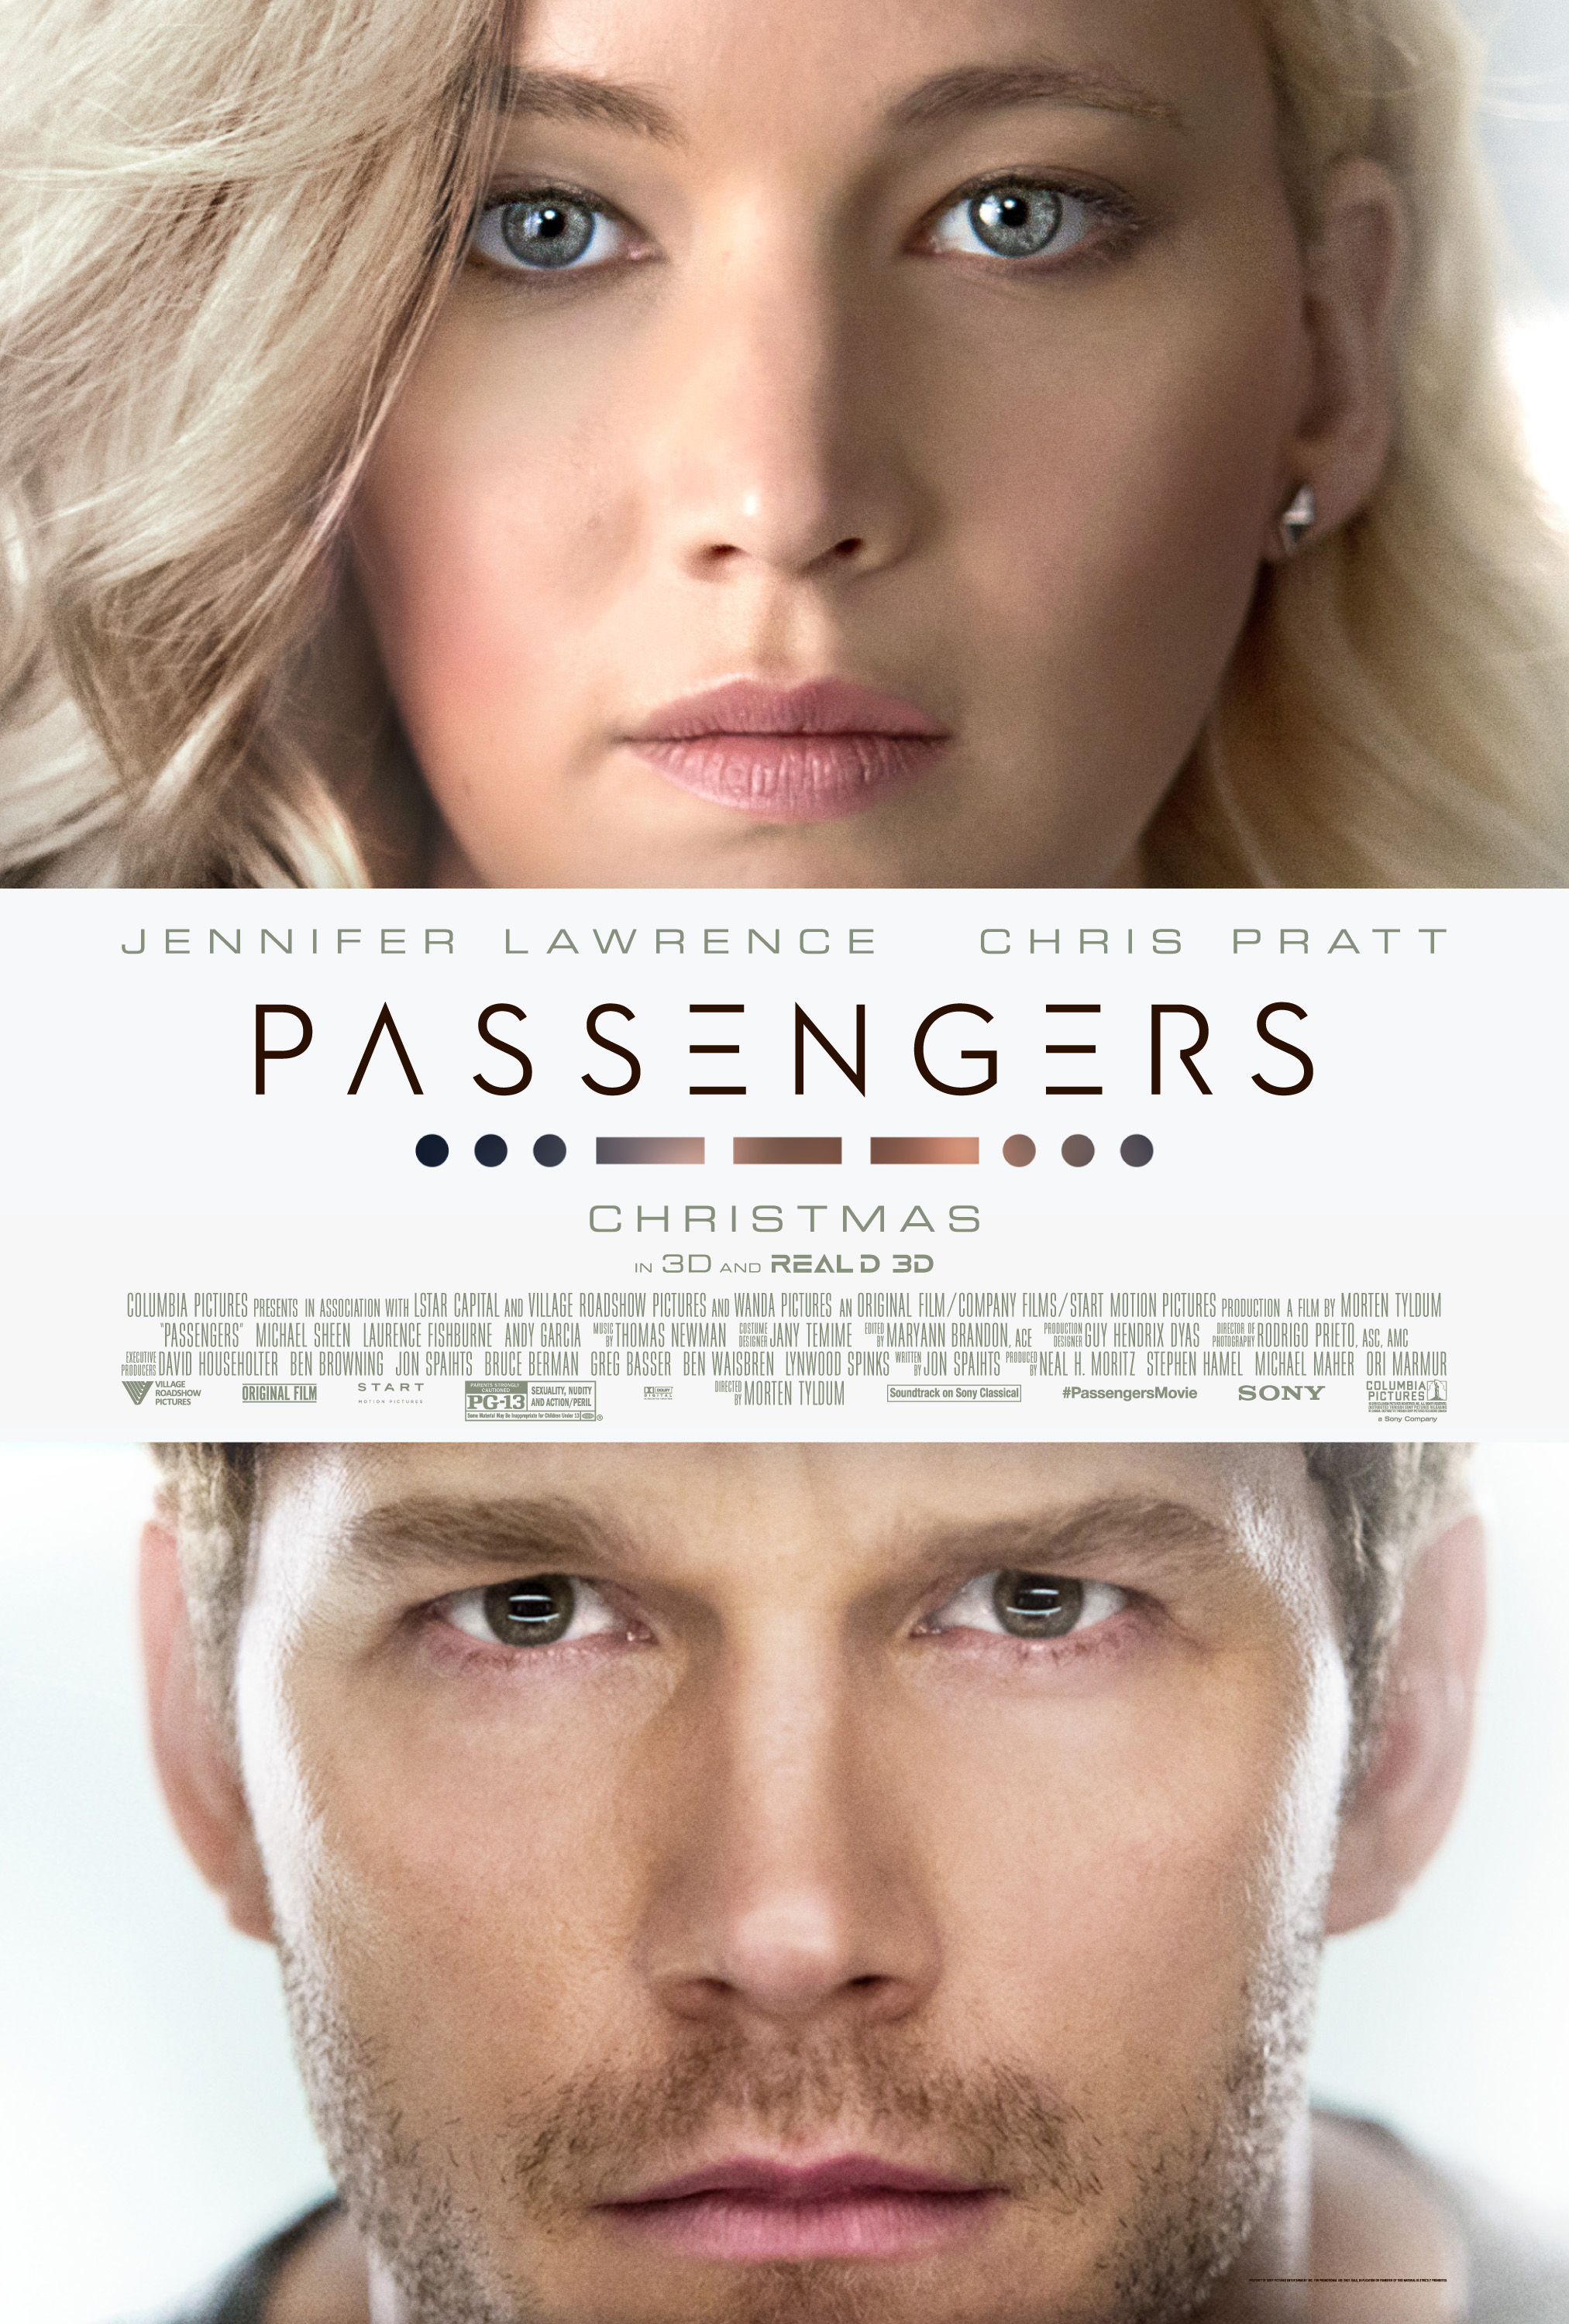 Passengers' Photos Prove Chris Pratt's Character Is a Creep